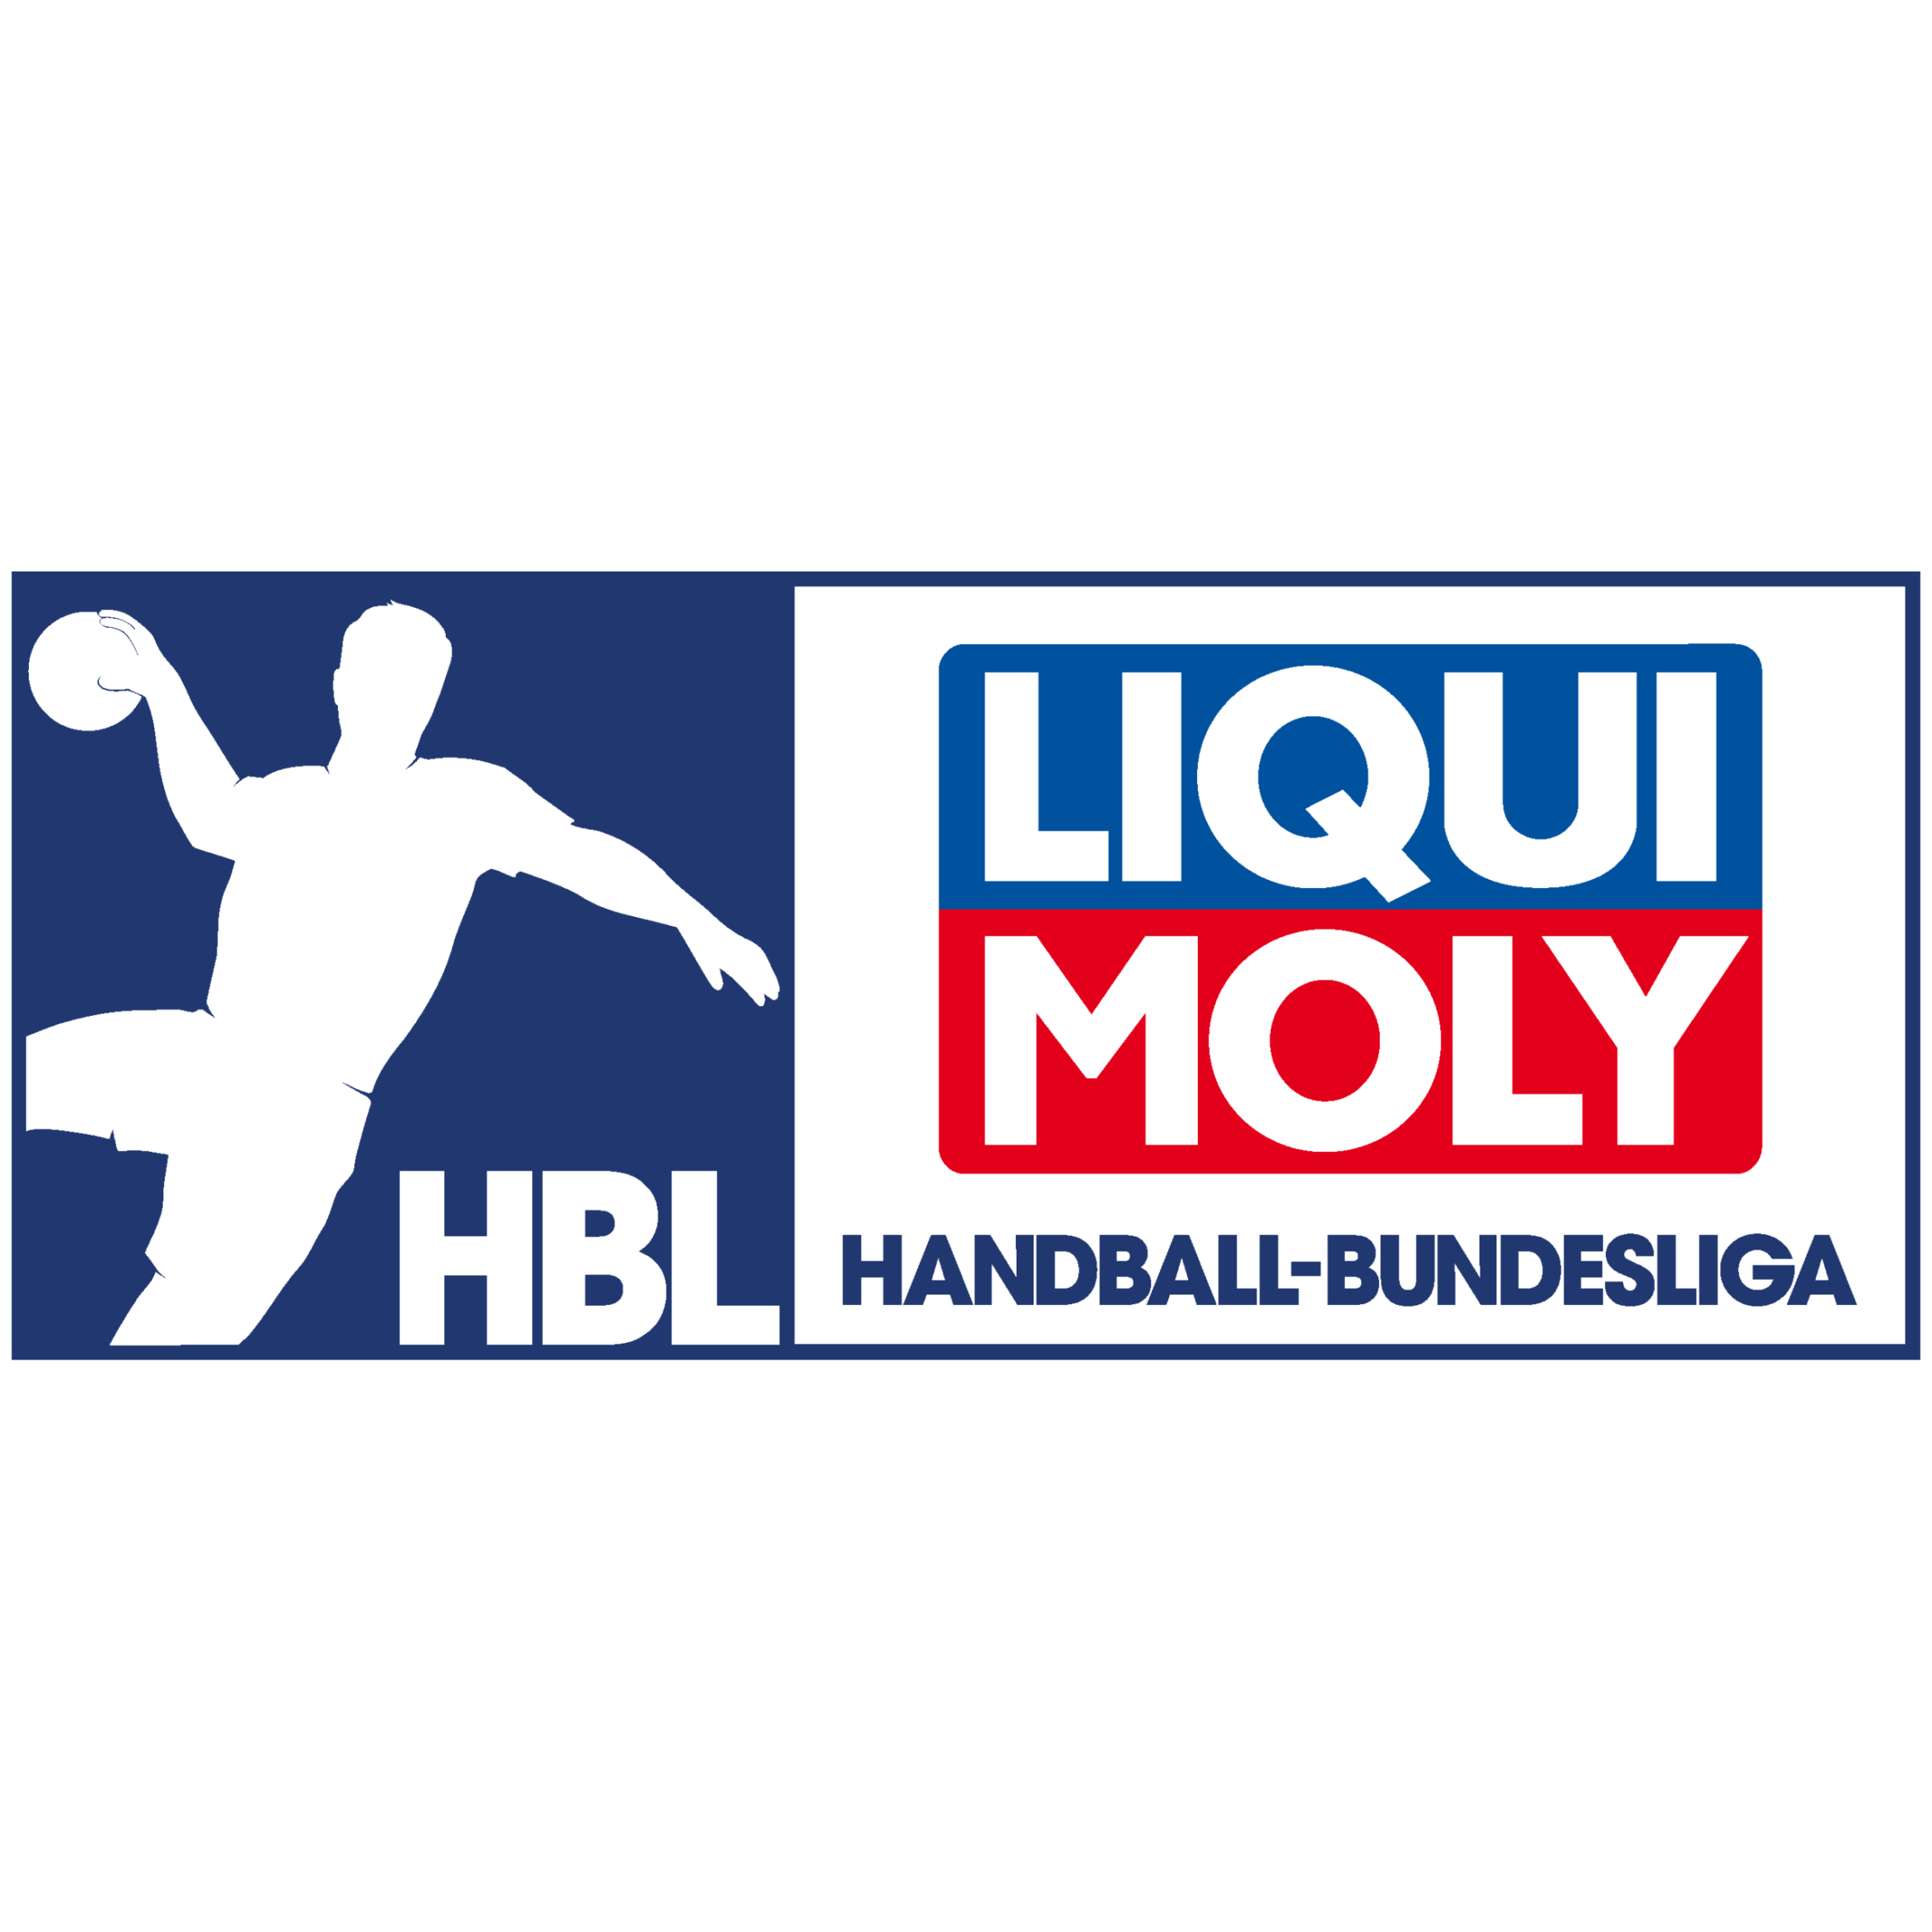 Liqui Moly Handball Bundesliga uses sports data analytics to manage the workload of players.